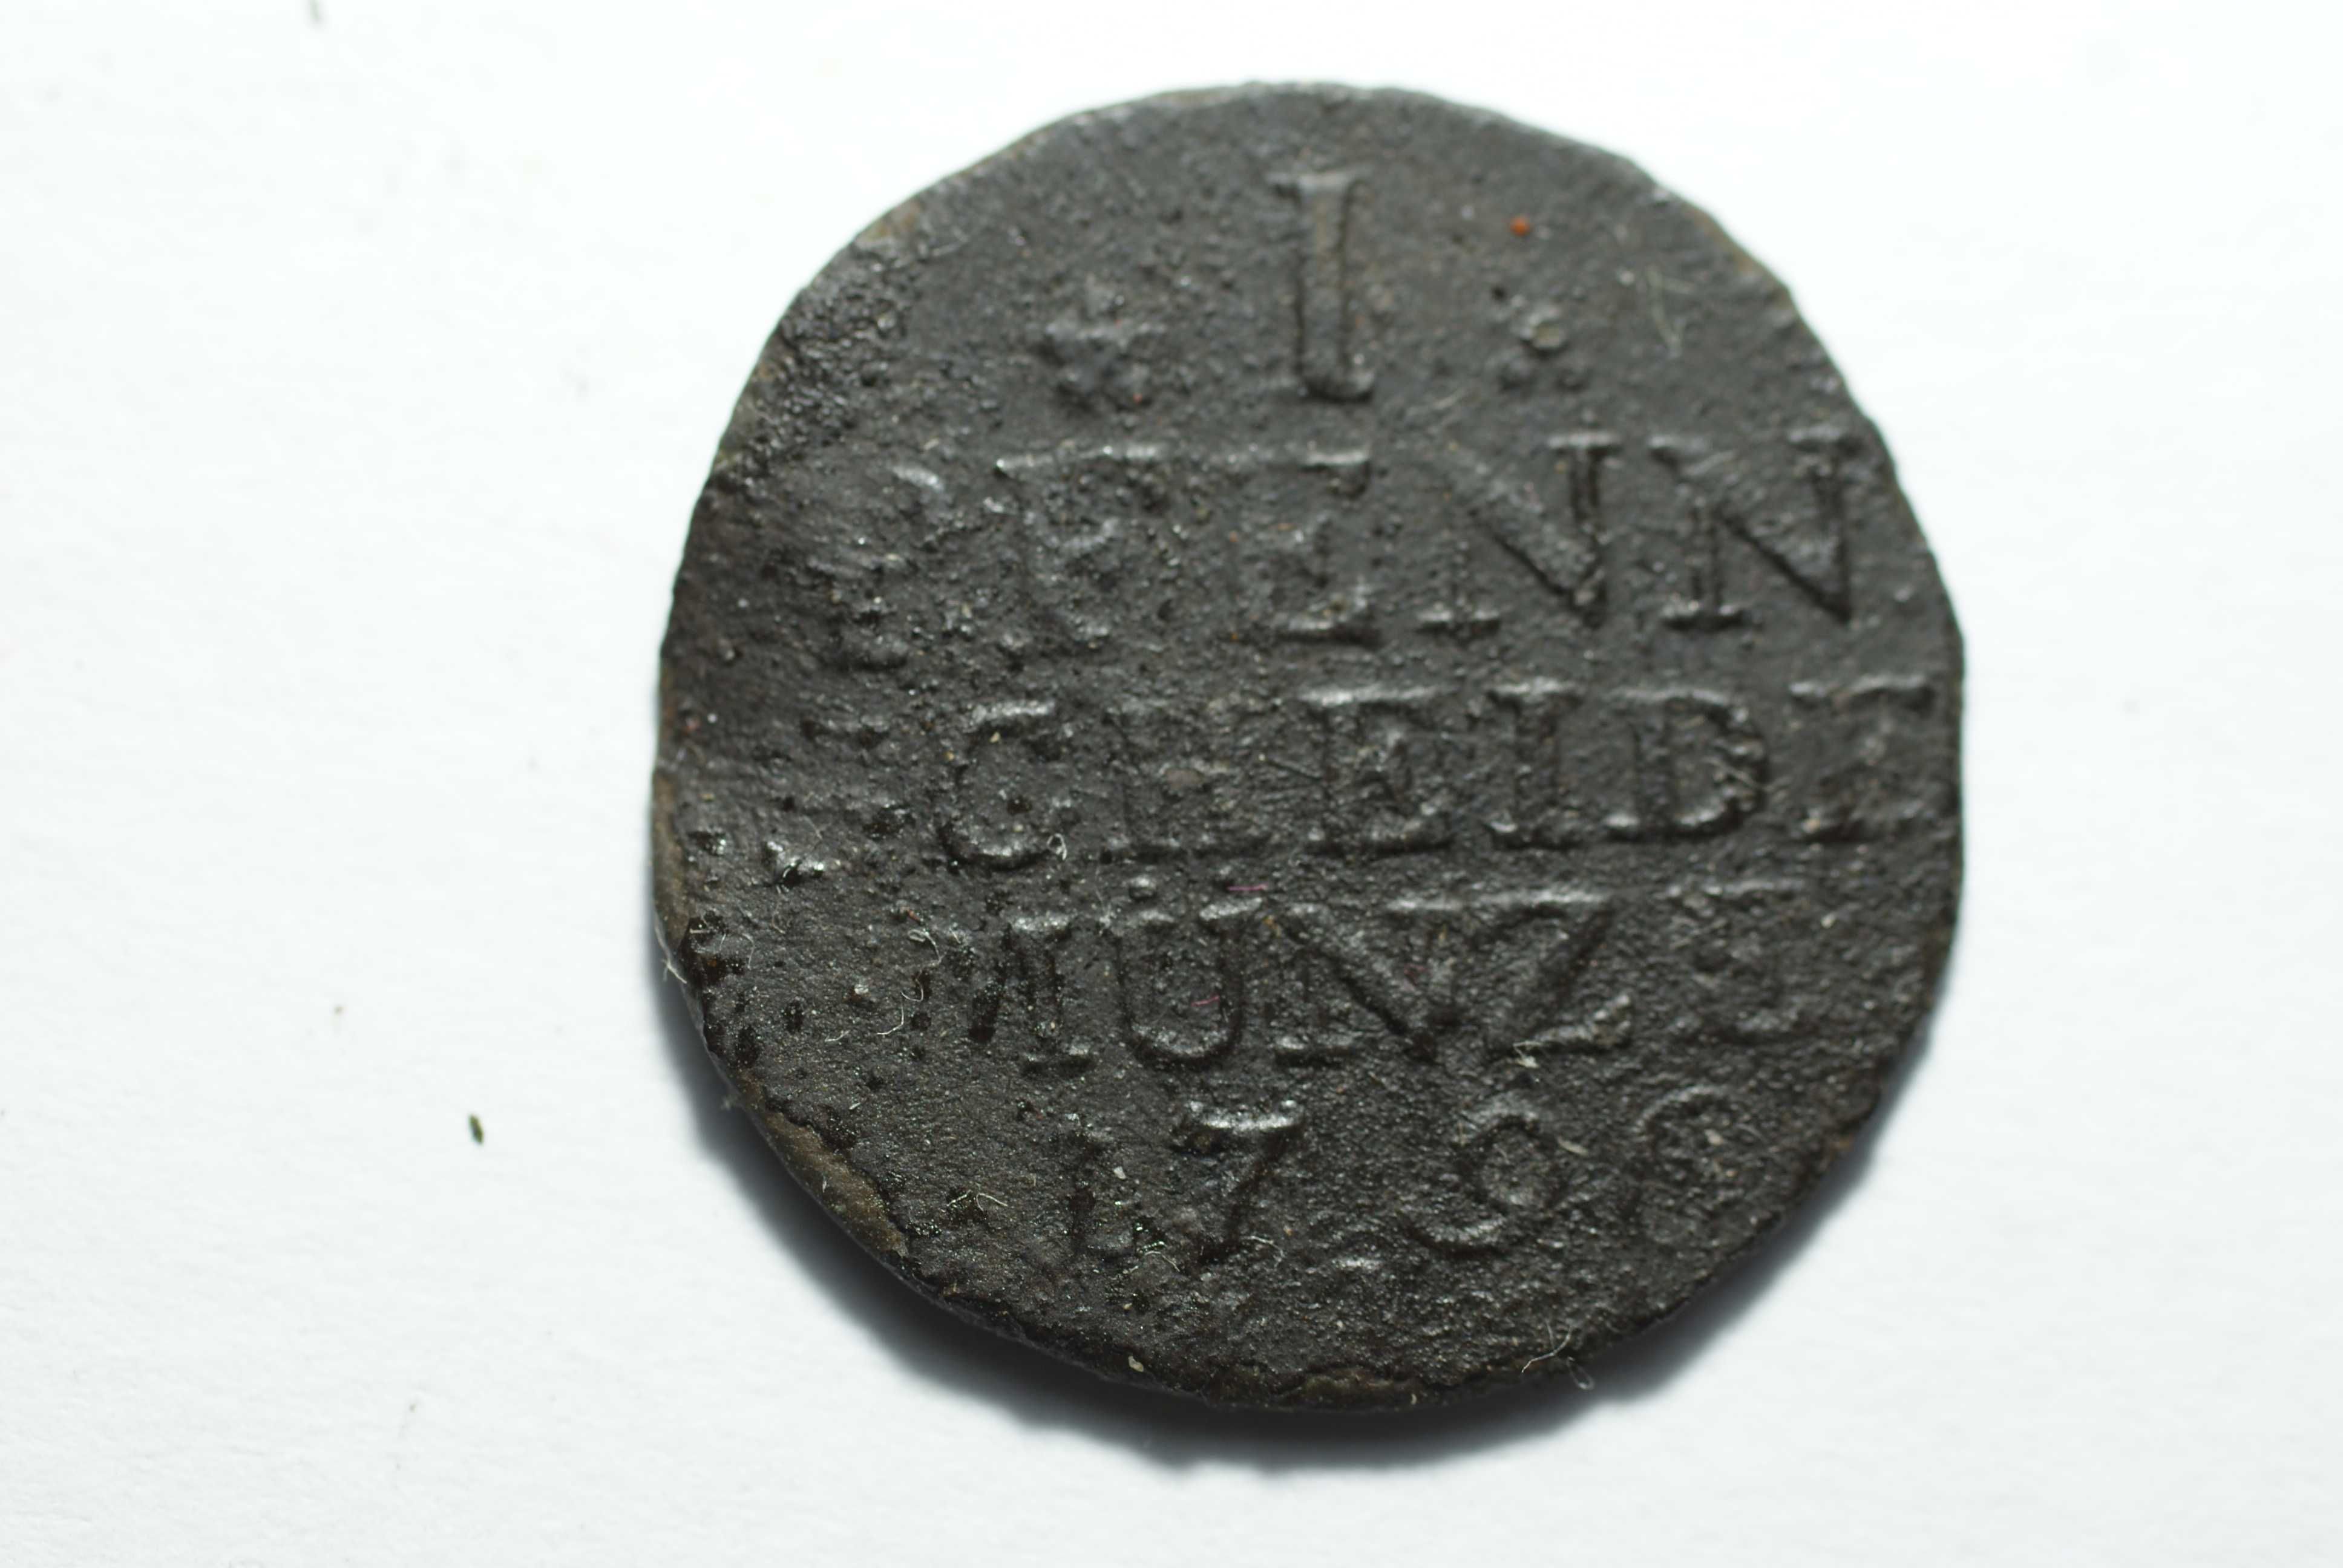 1 pfenn Scheide munze 1796